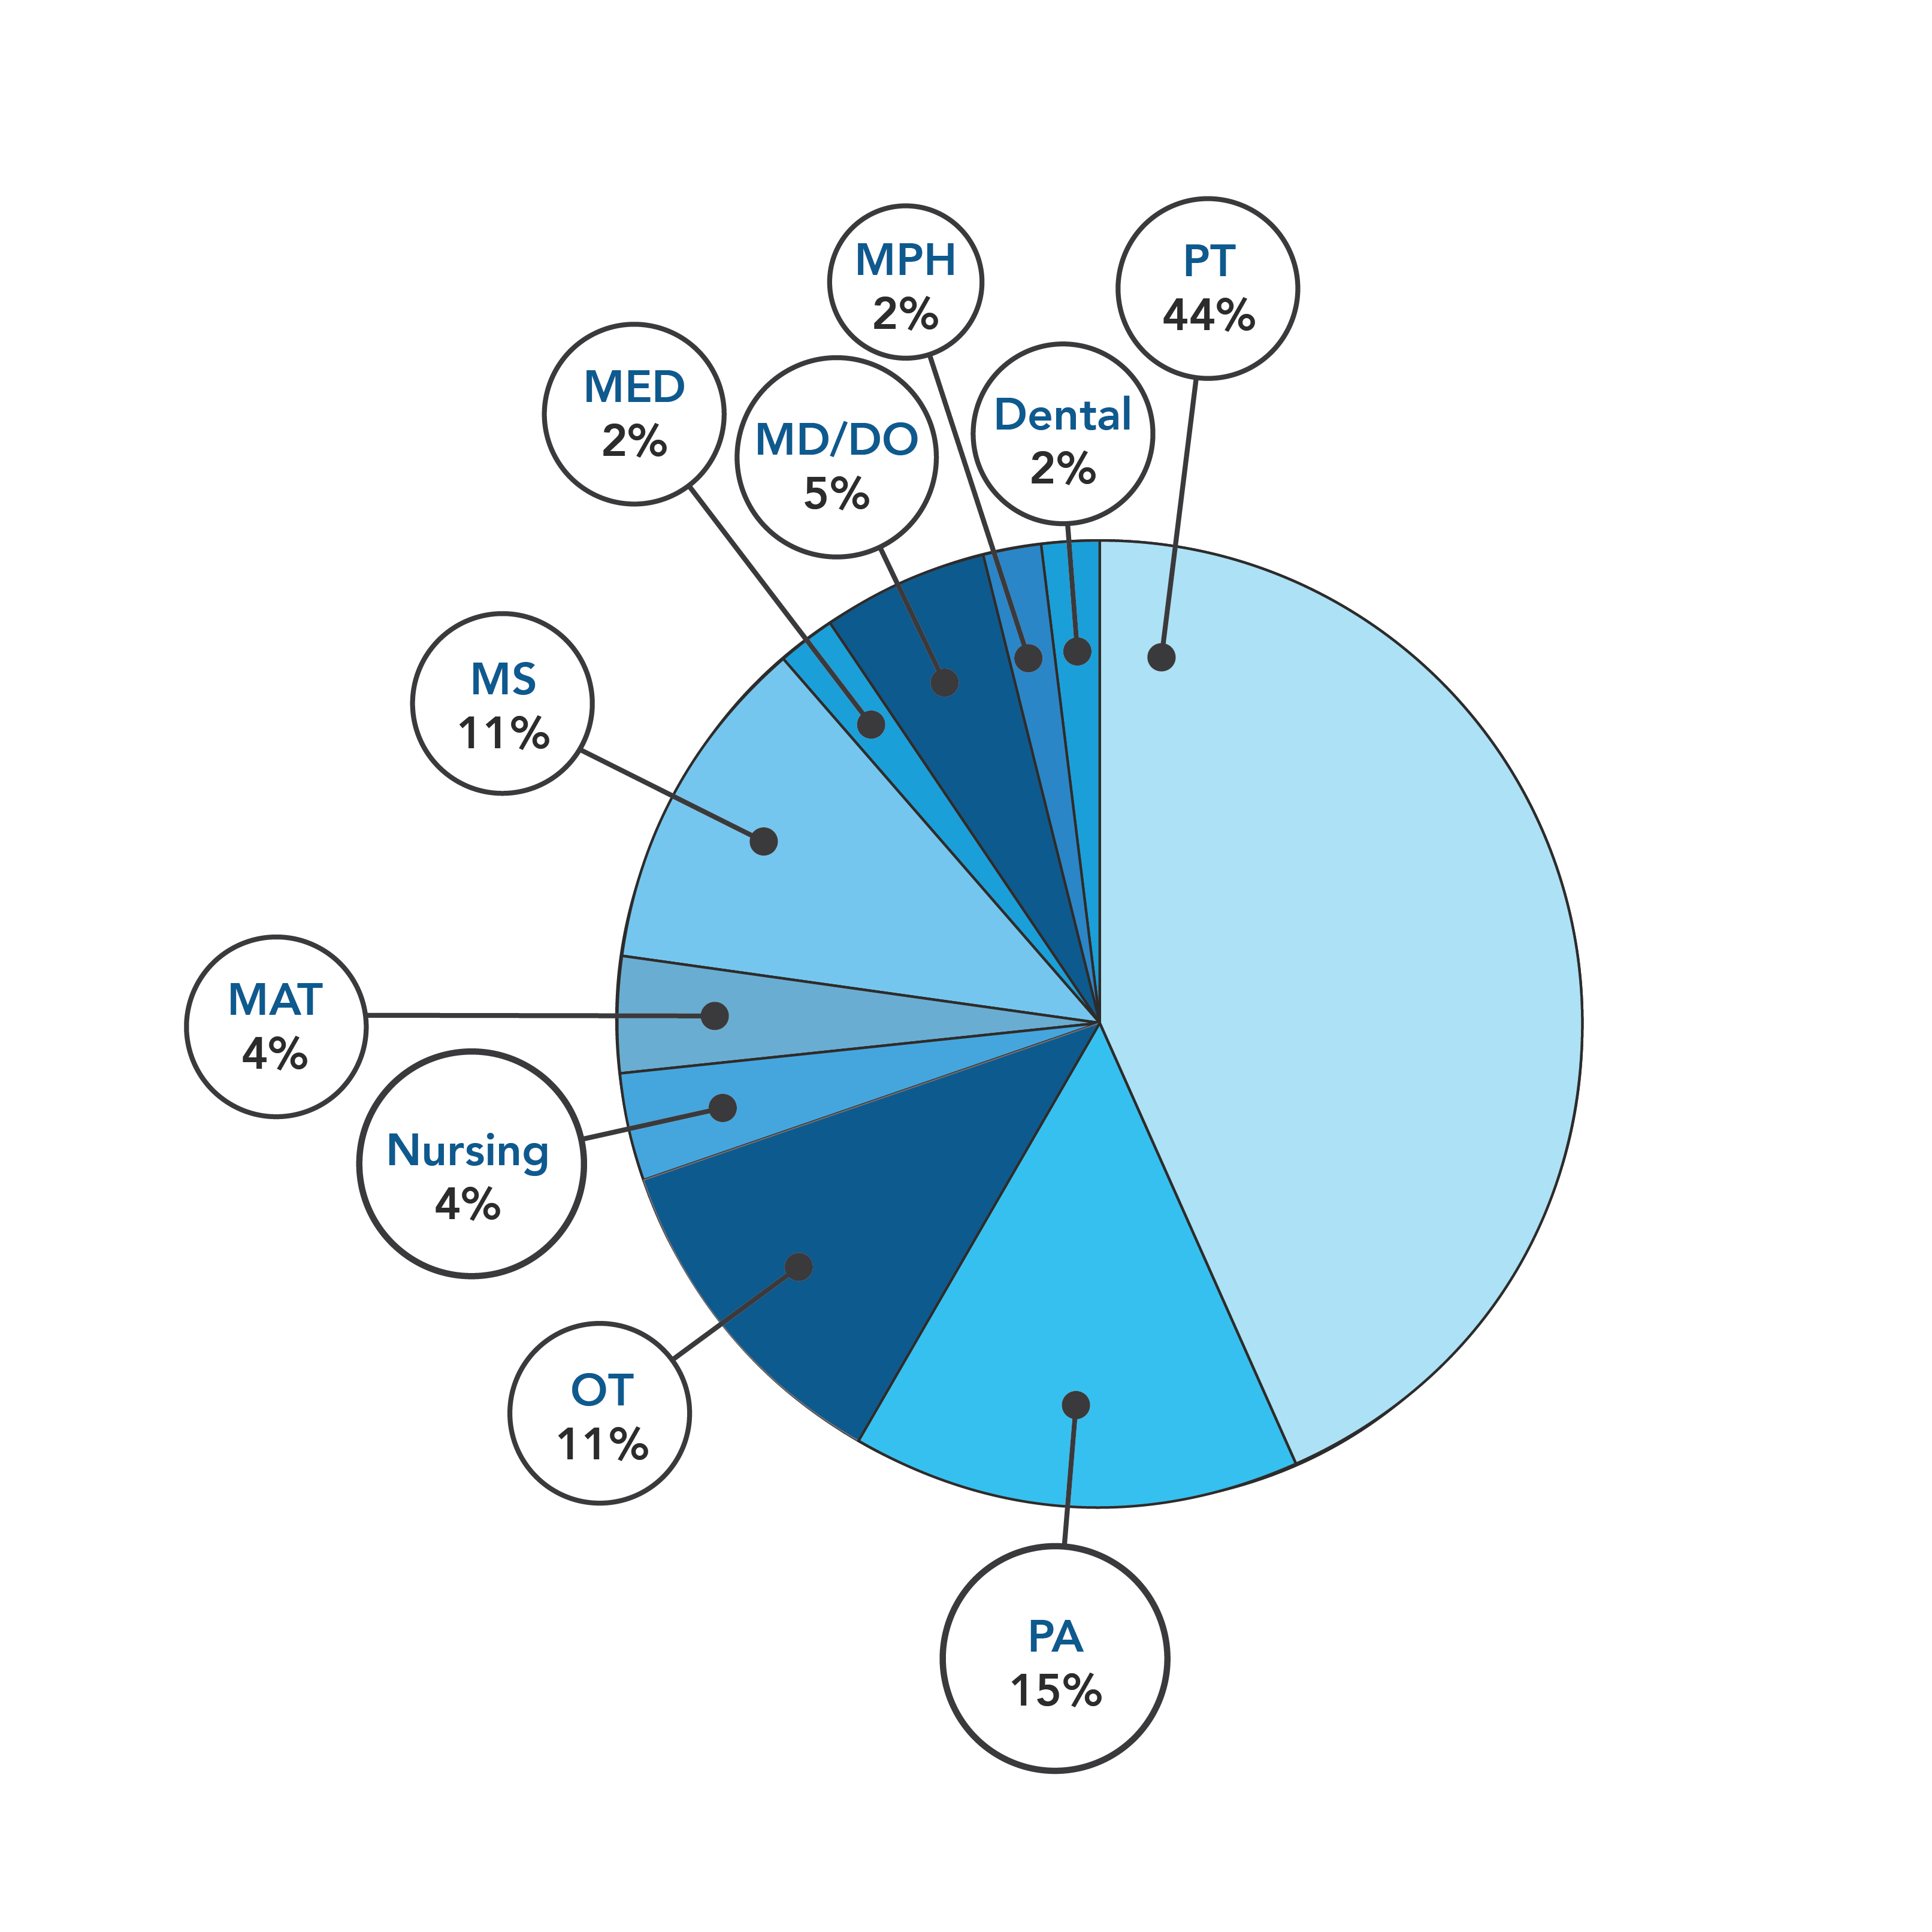 Pie chart. PT (44%), Dental (2%), MPH (2%), MD/DO (5%), MED (2%), MS (11%), MAT (4%), Nursing (4%), OT (11%), PA (15%).